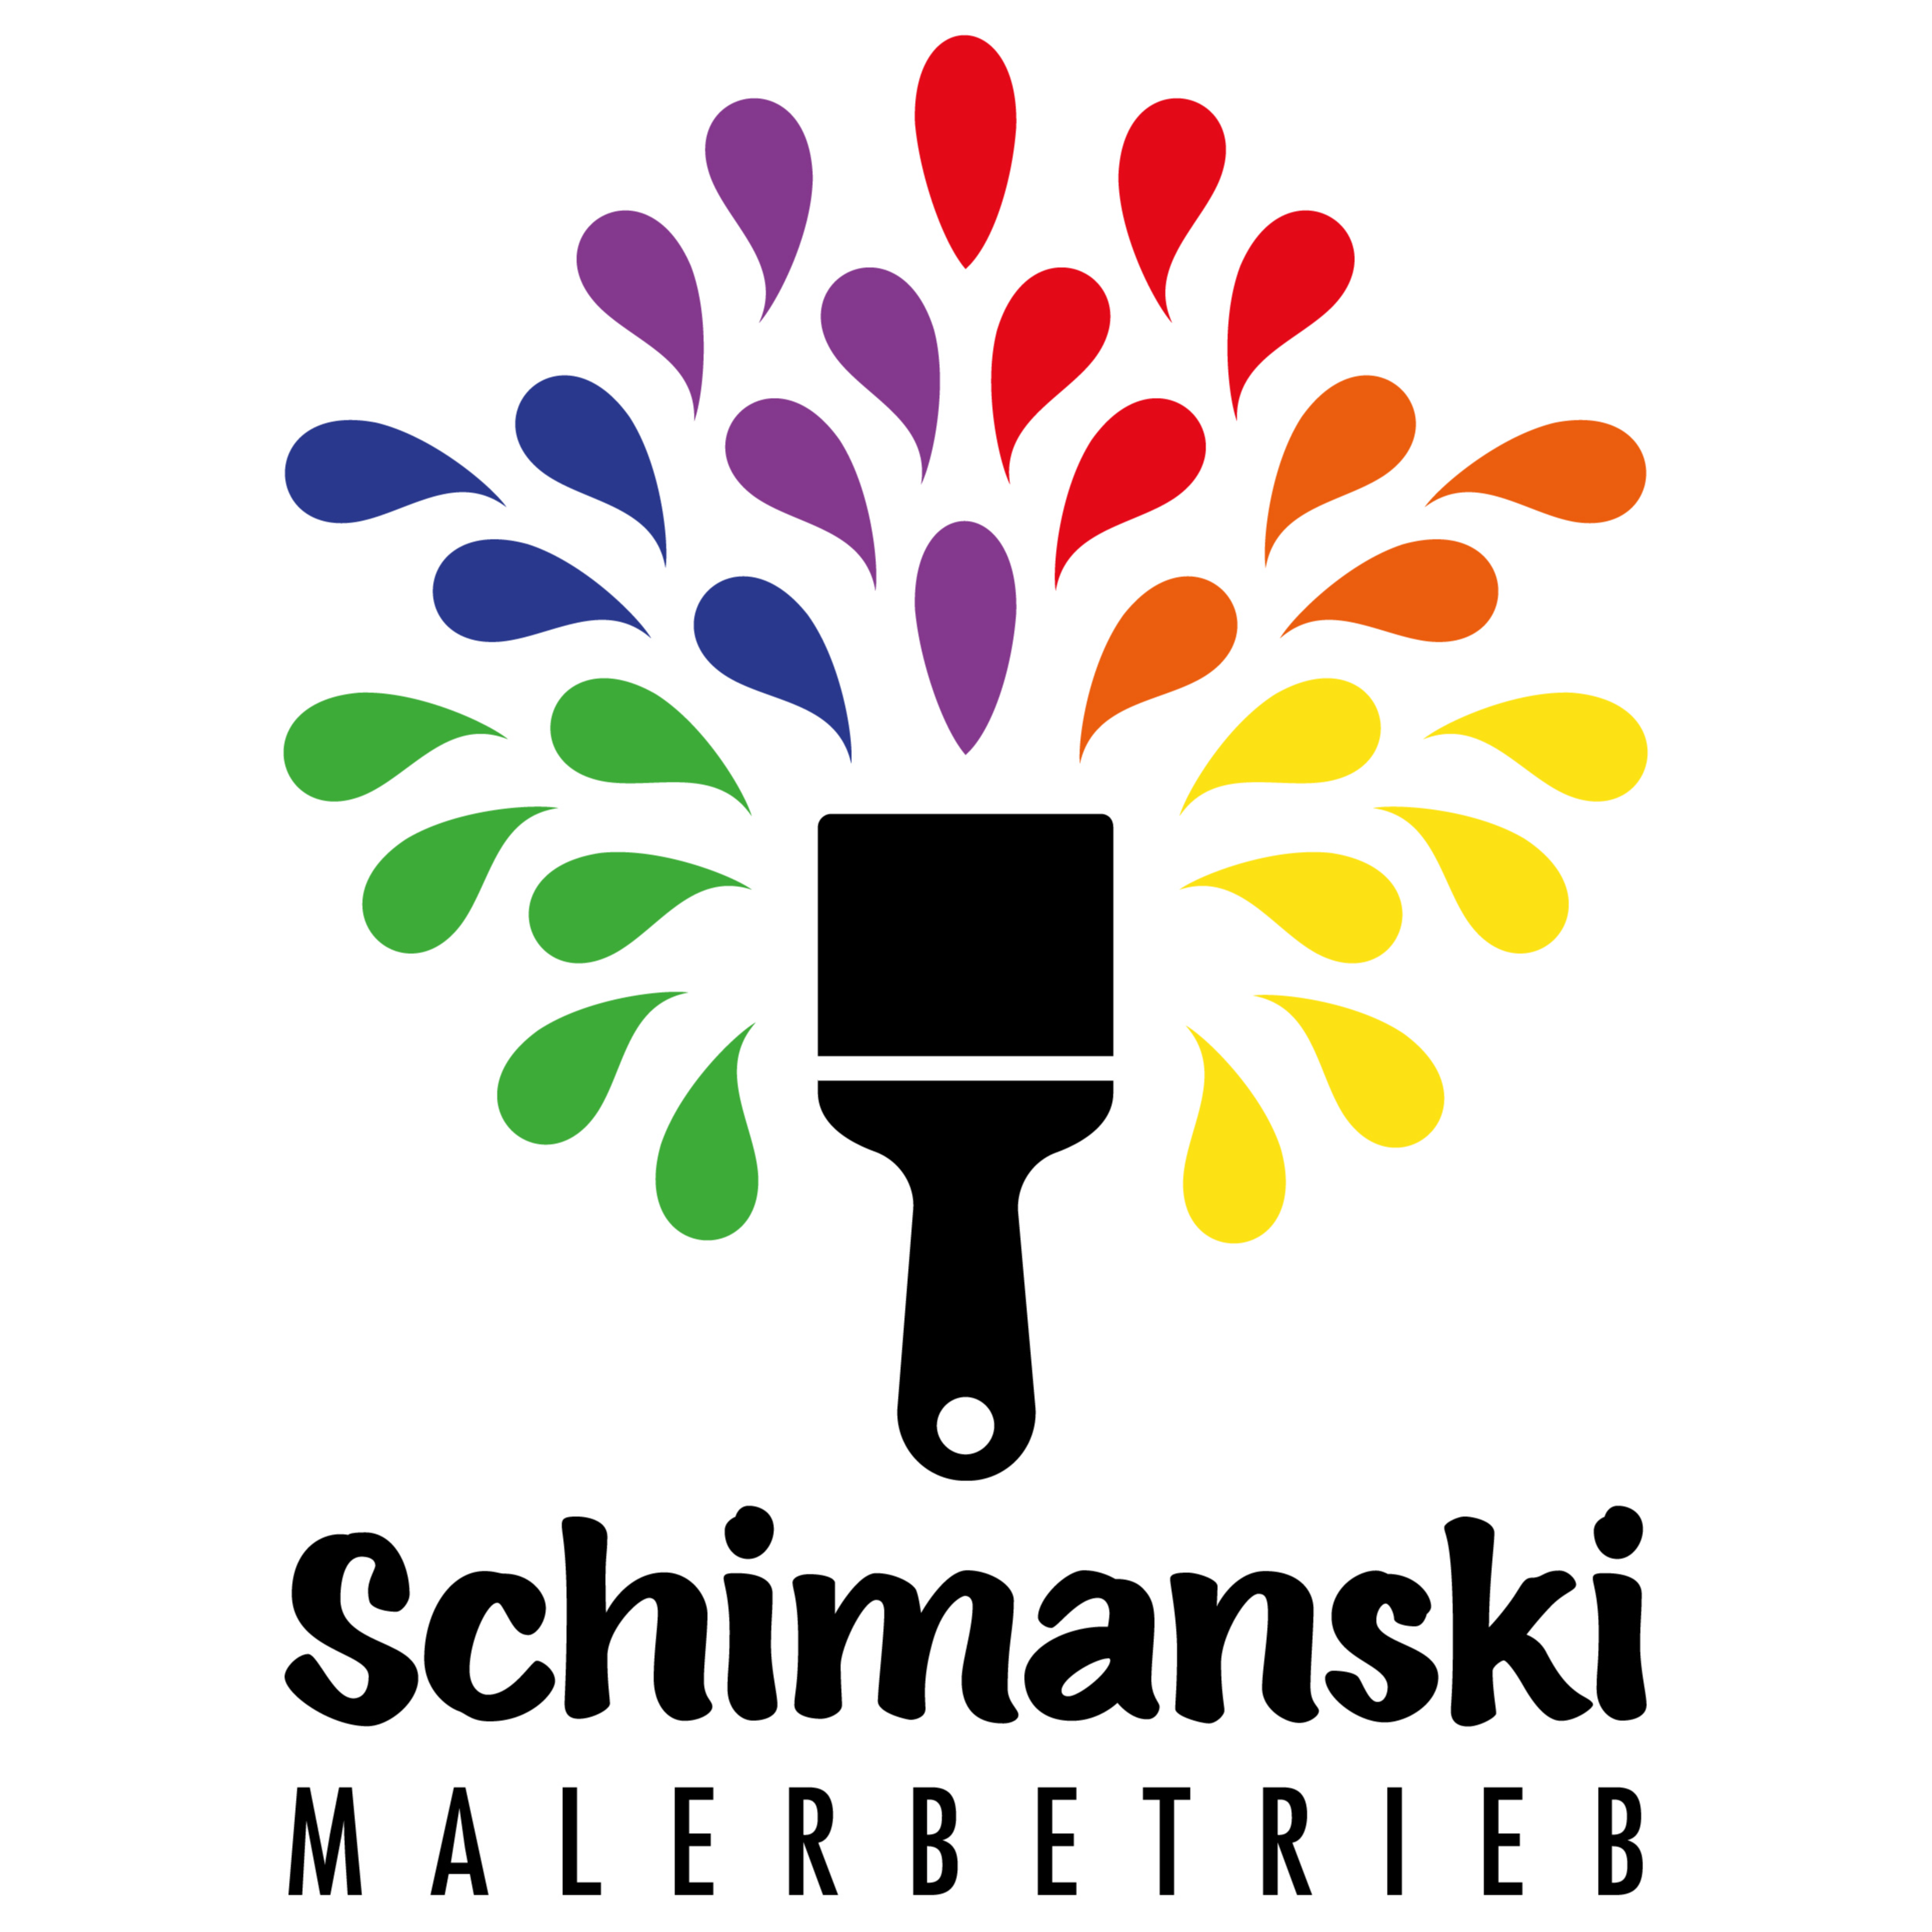 Malerbetrieb Schimanski Logo